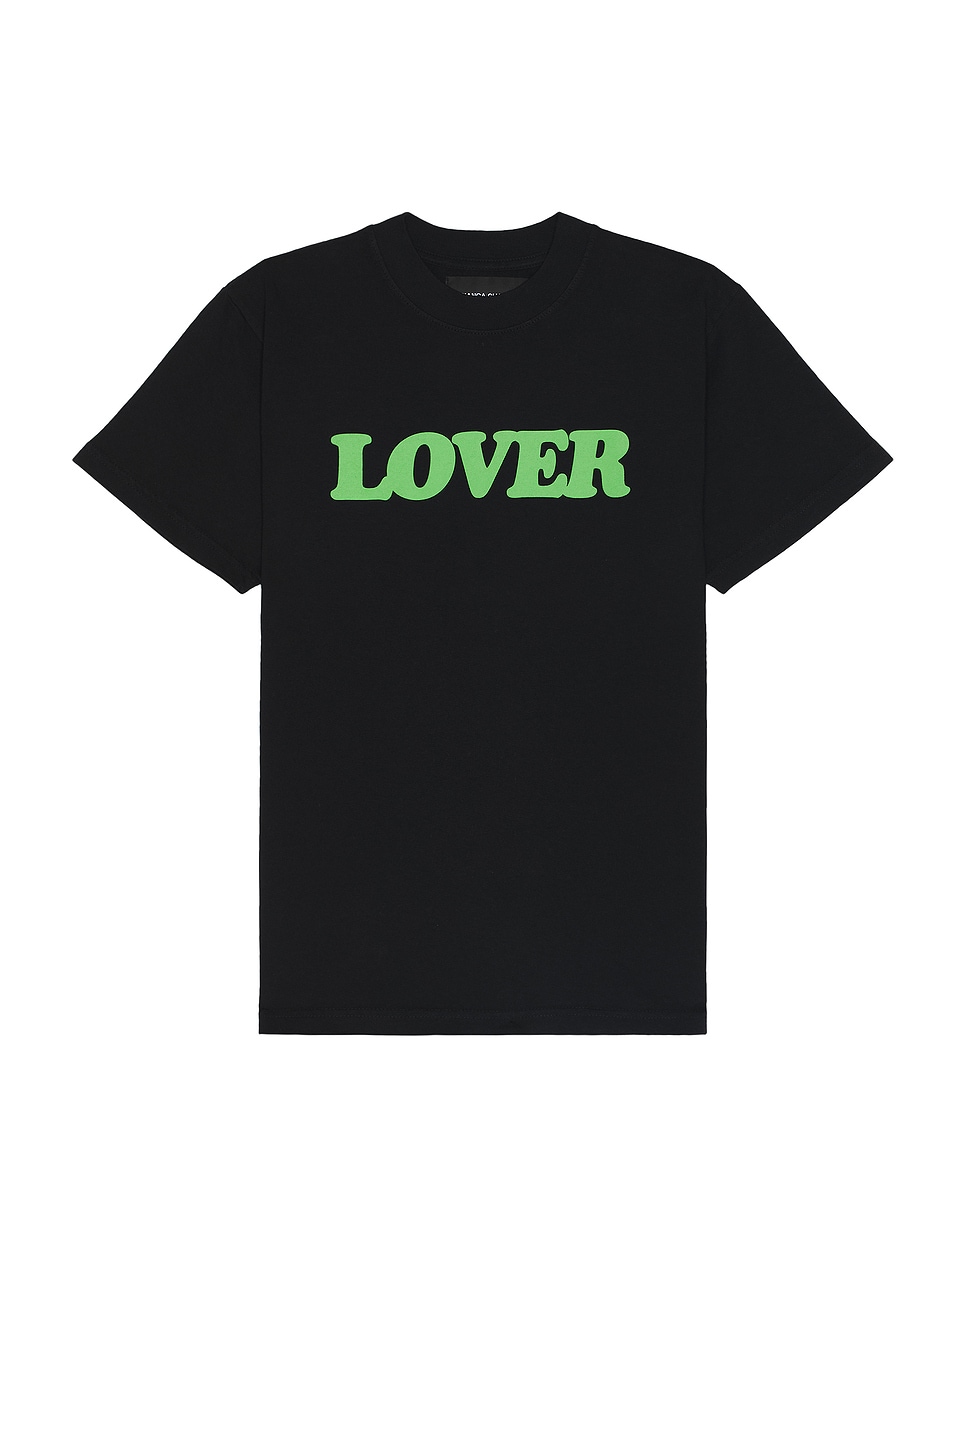 Image 1 of Bianca Chandon Lover Big Logo Shirt in Black